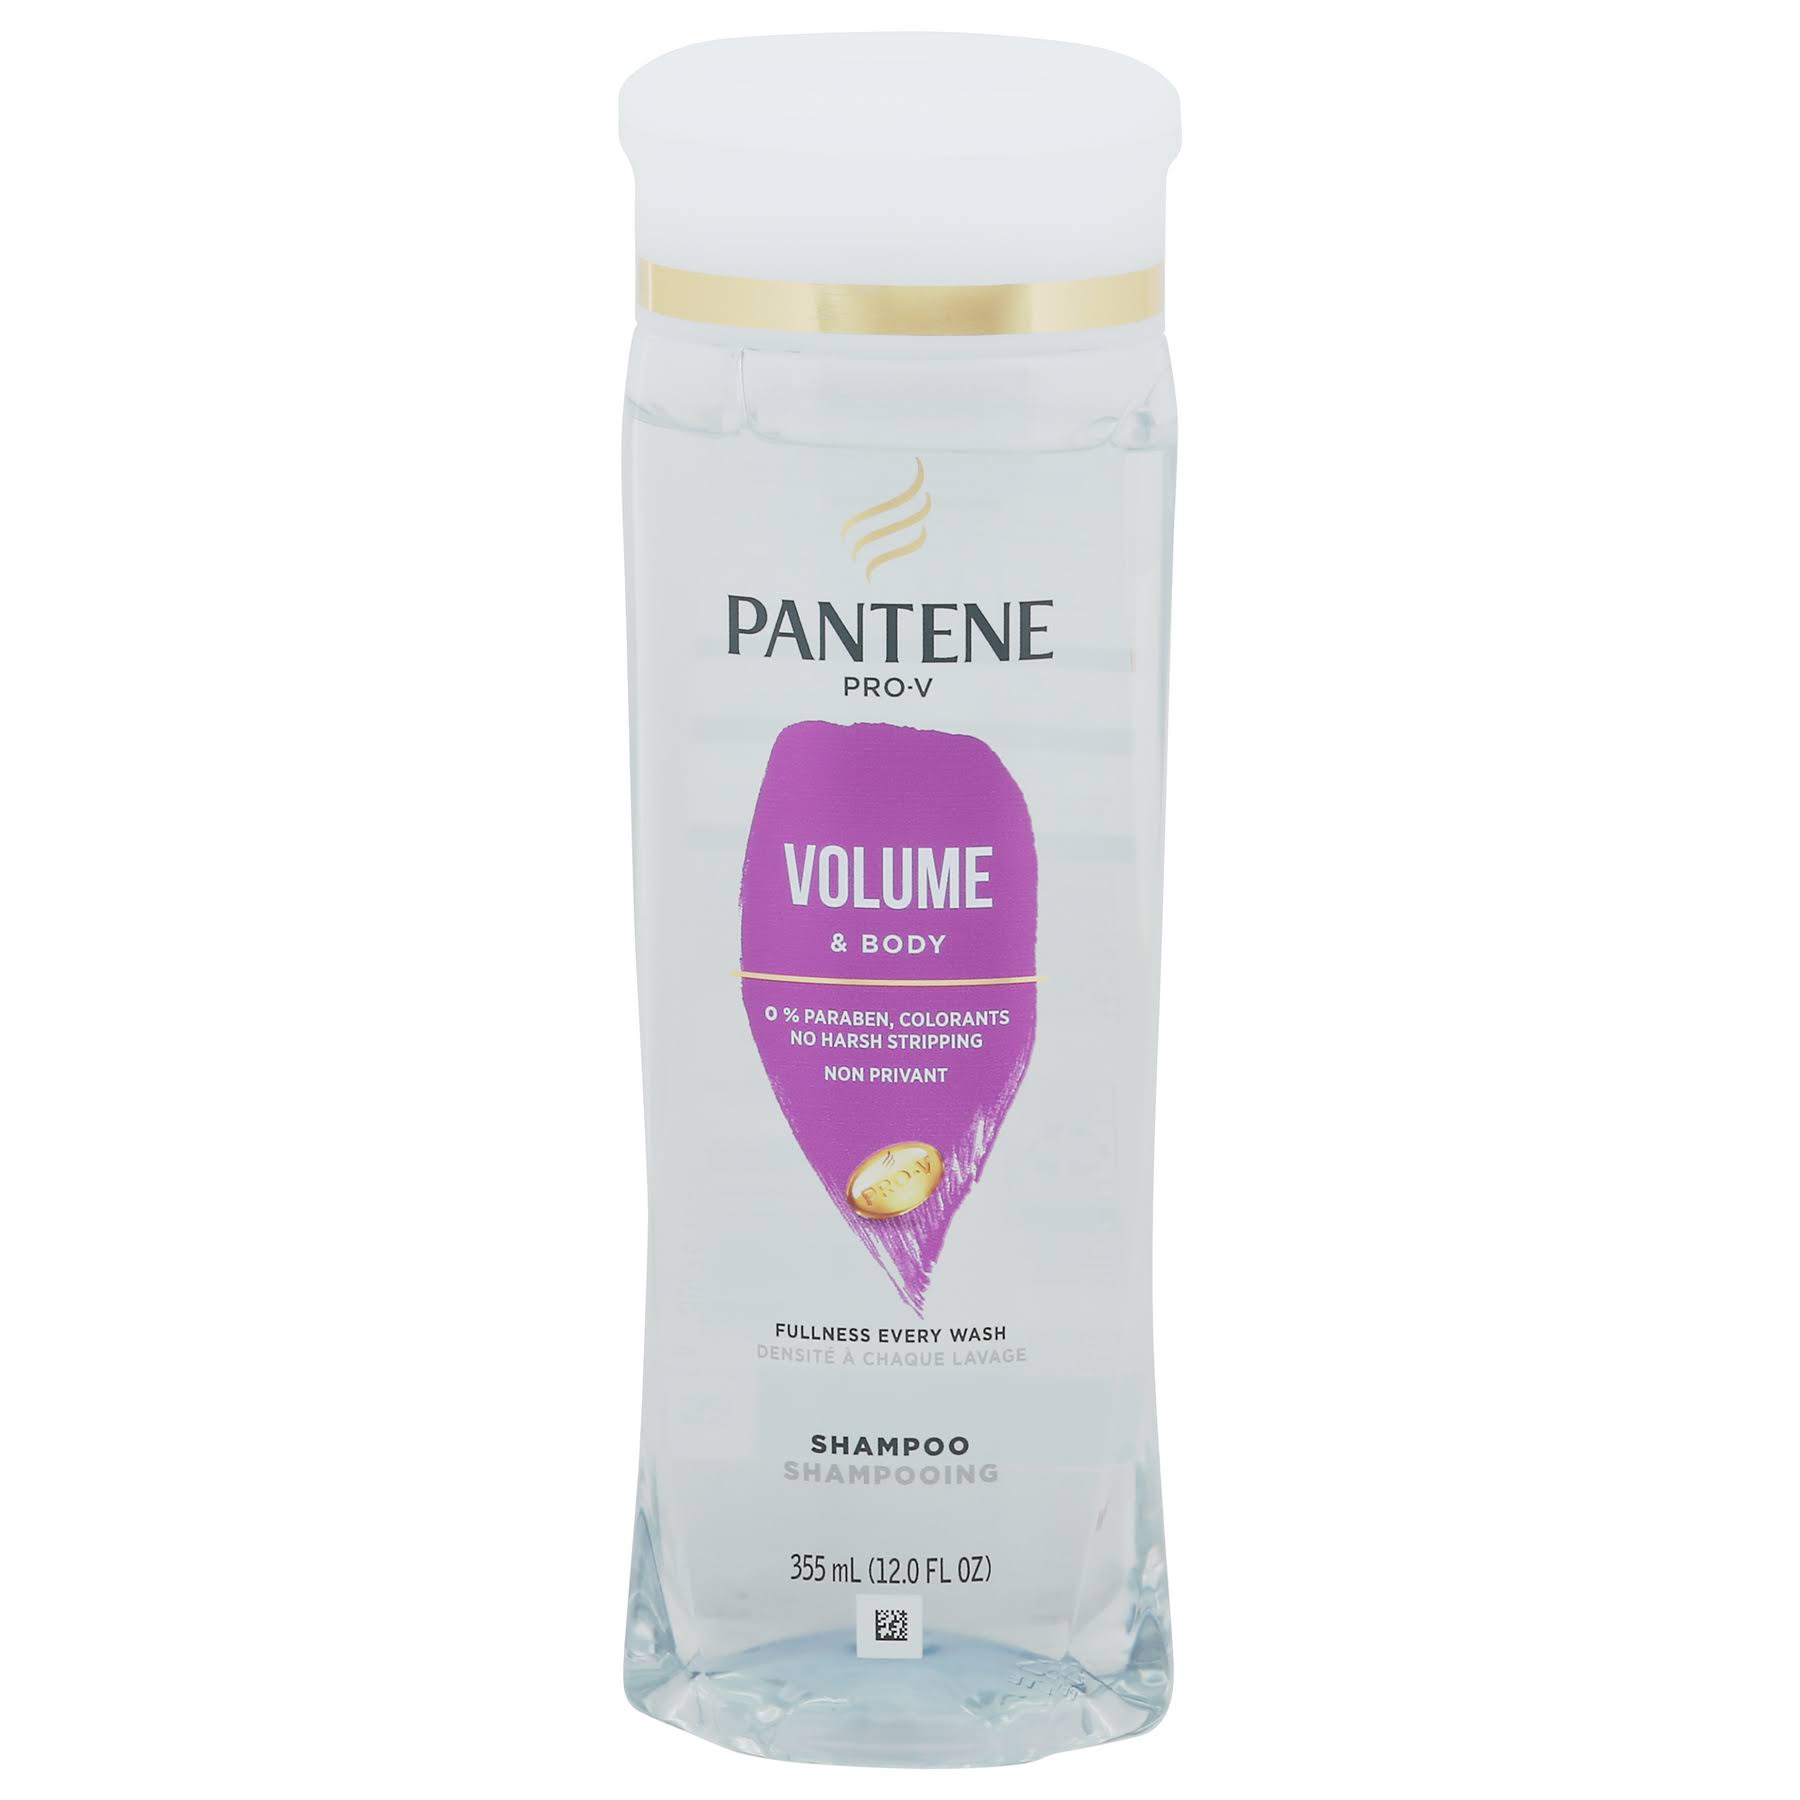 Pantene Pro-V Volume & Body Shampoo 12 oz Bottle